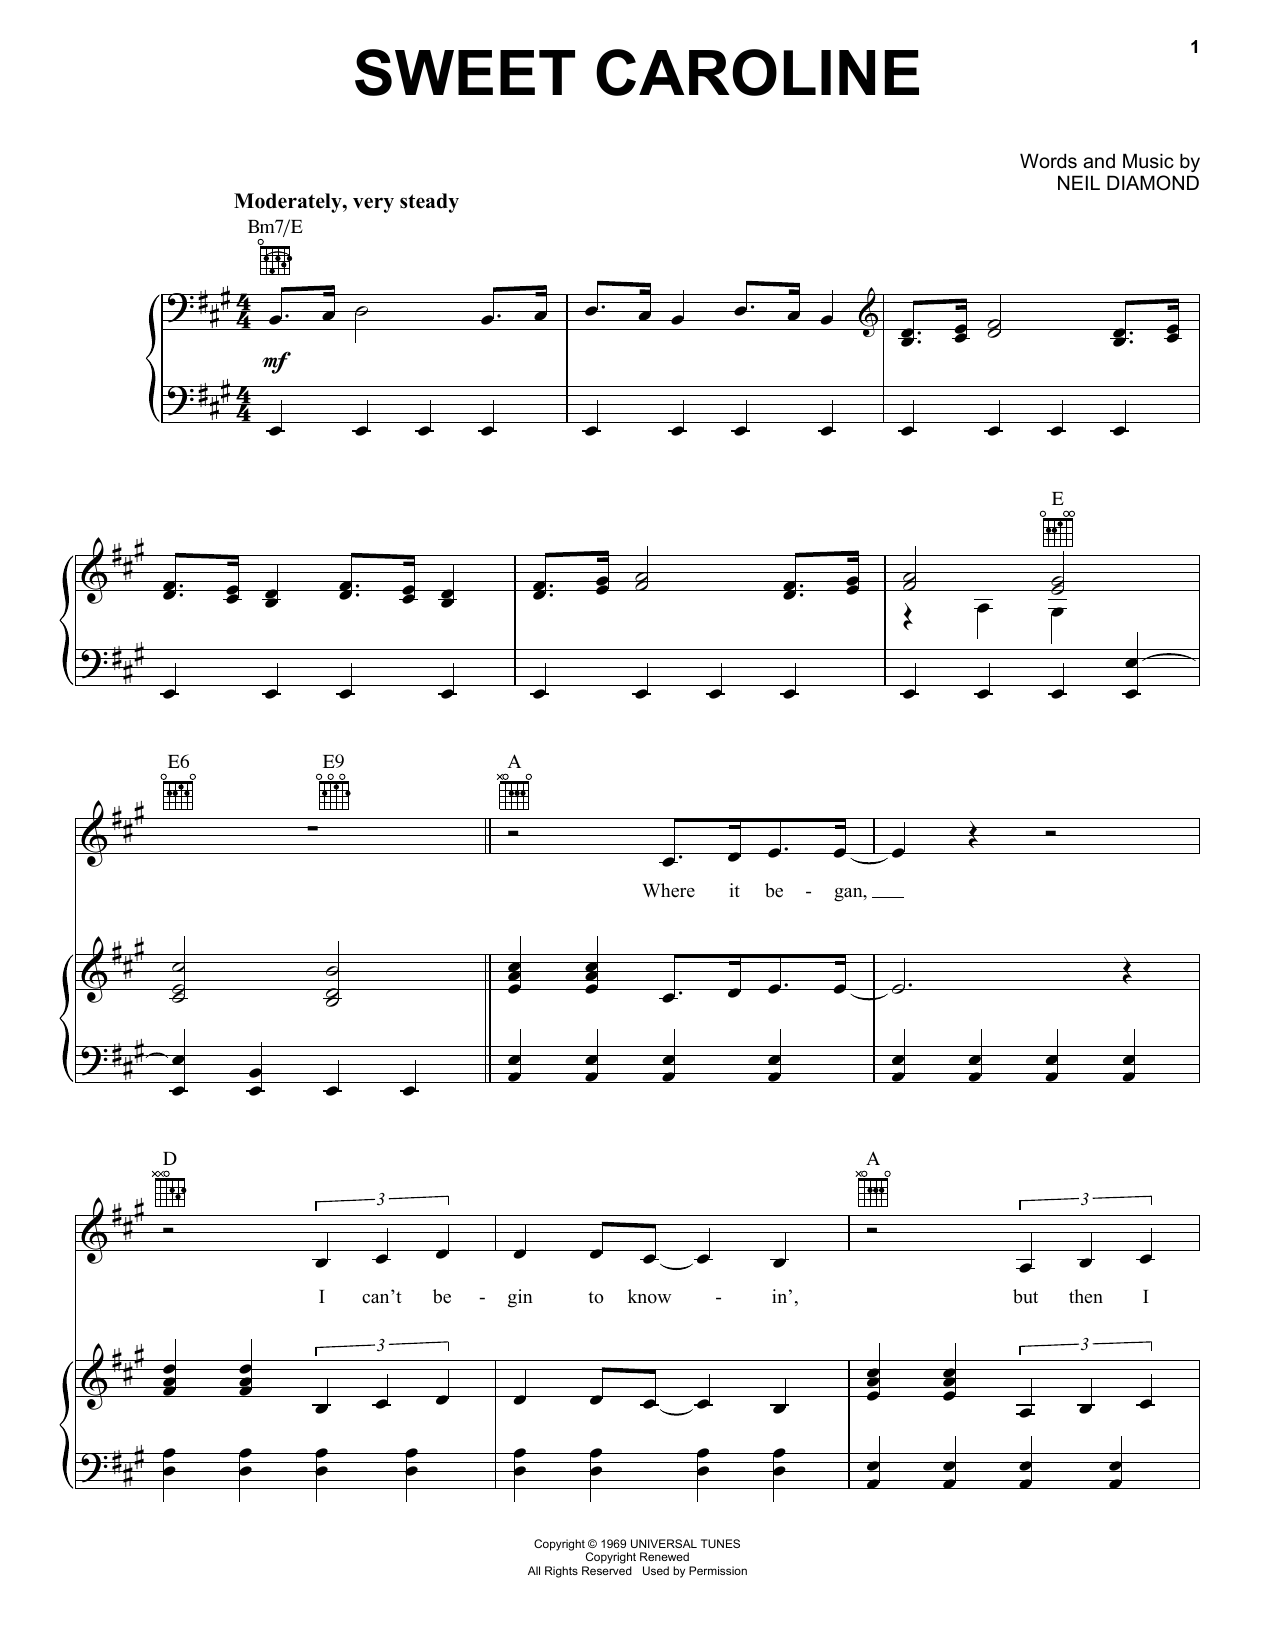 Neil Diamond Sweet Caroline sheet music notes and chords arranged for Dulcimer